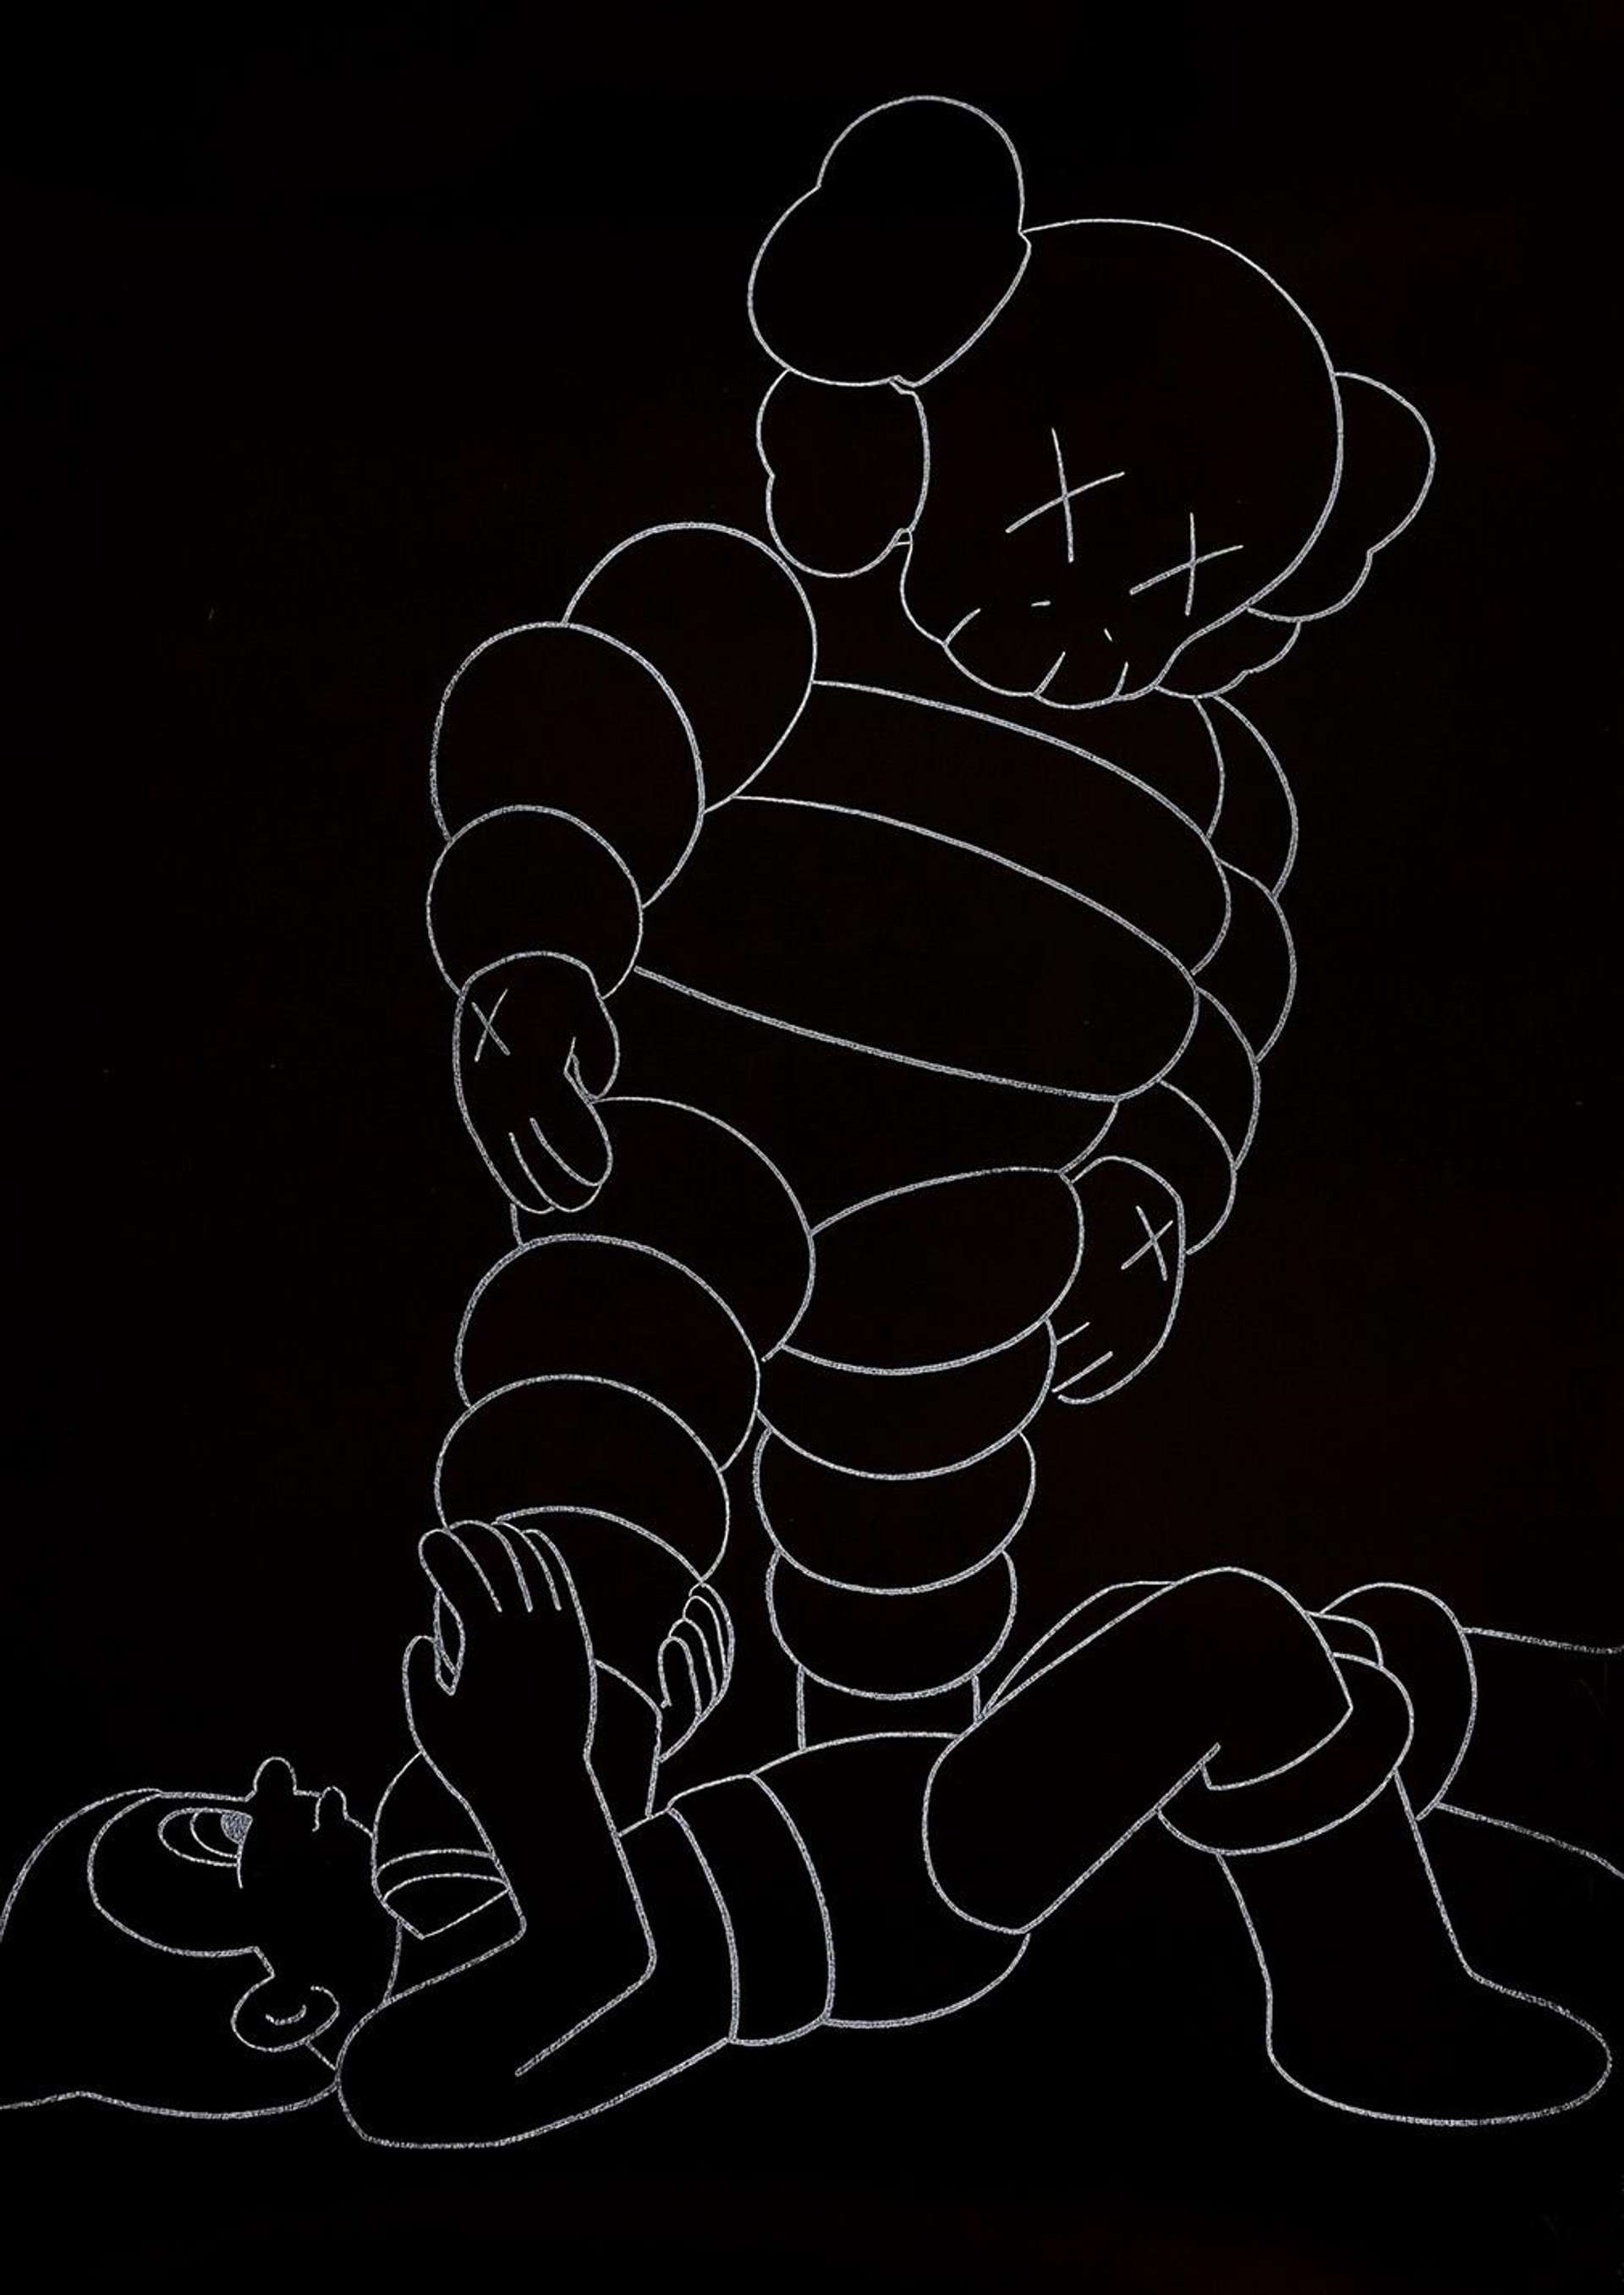 Chum VS Astro Boy by KAWS